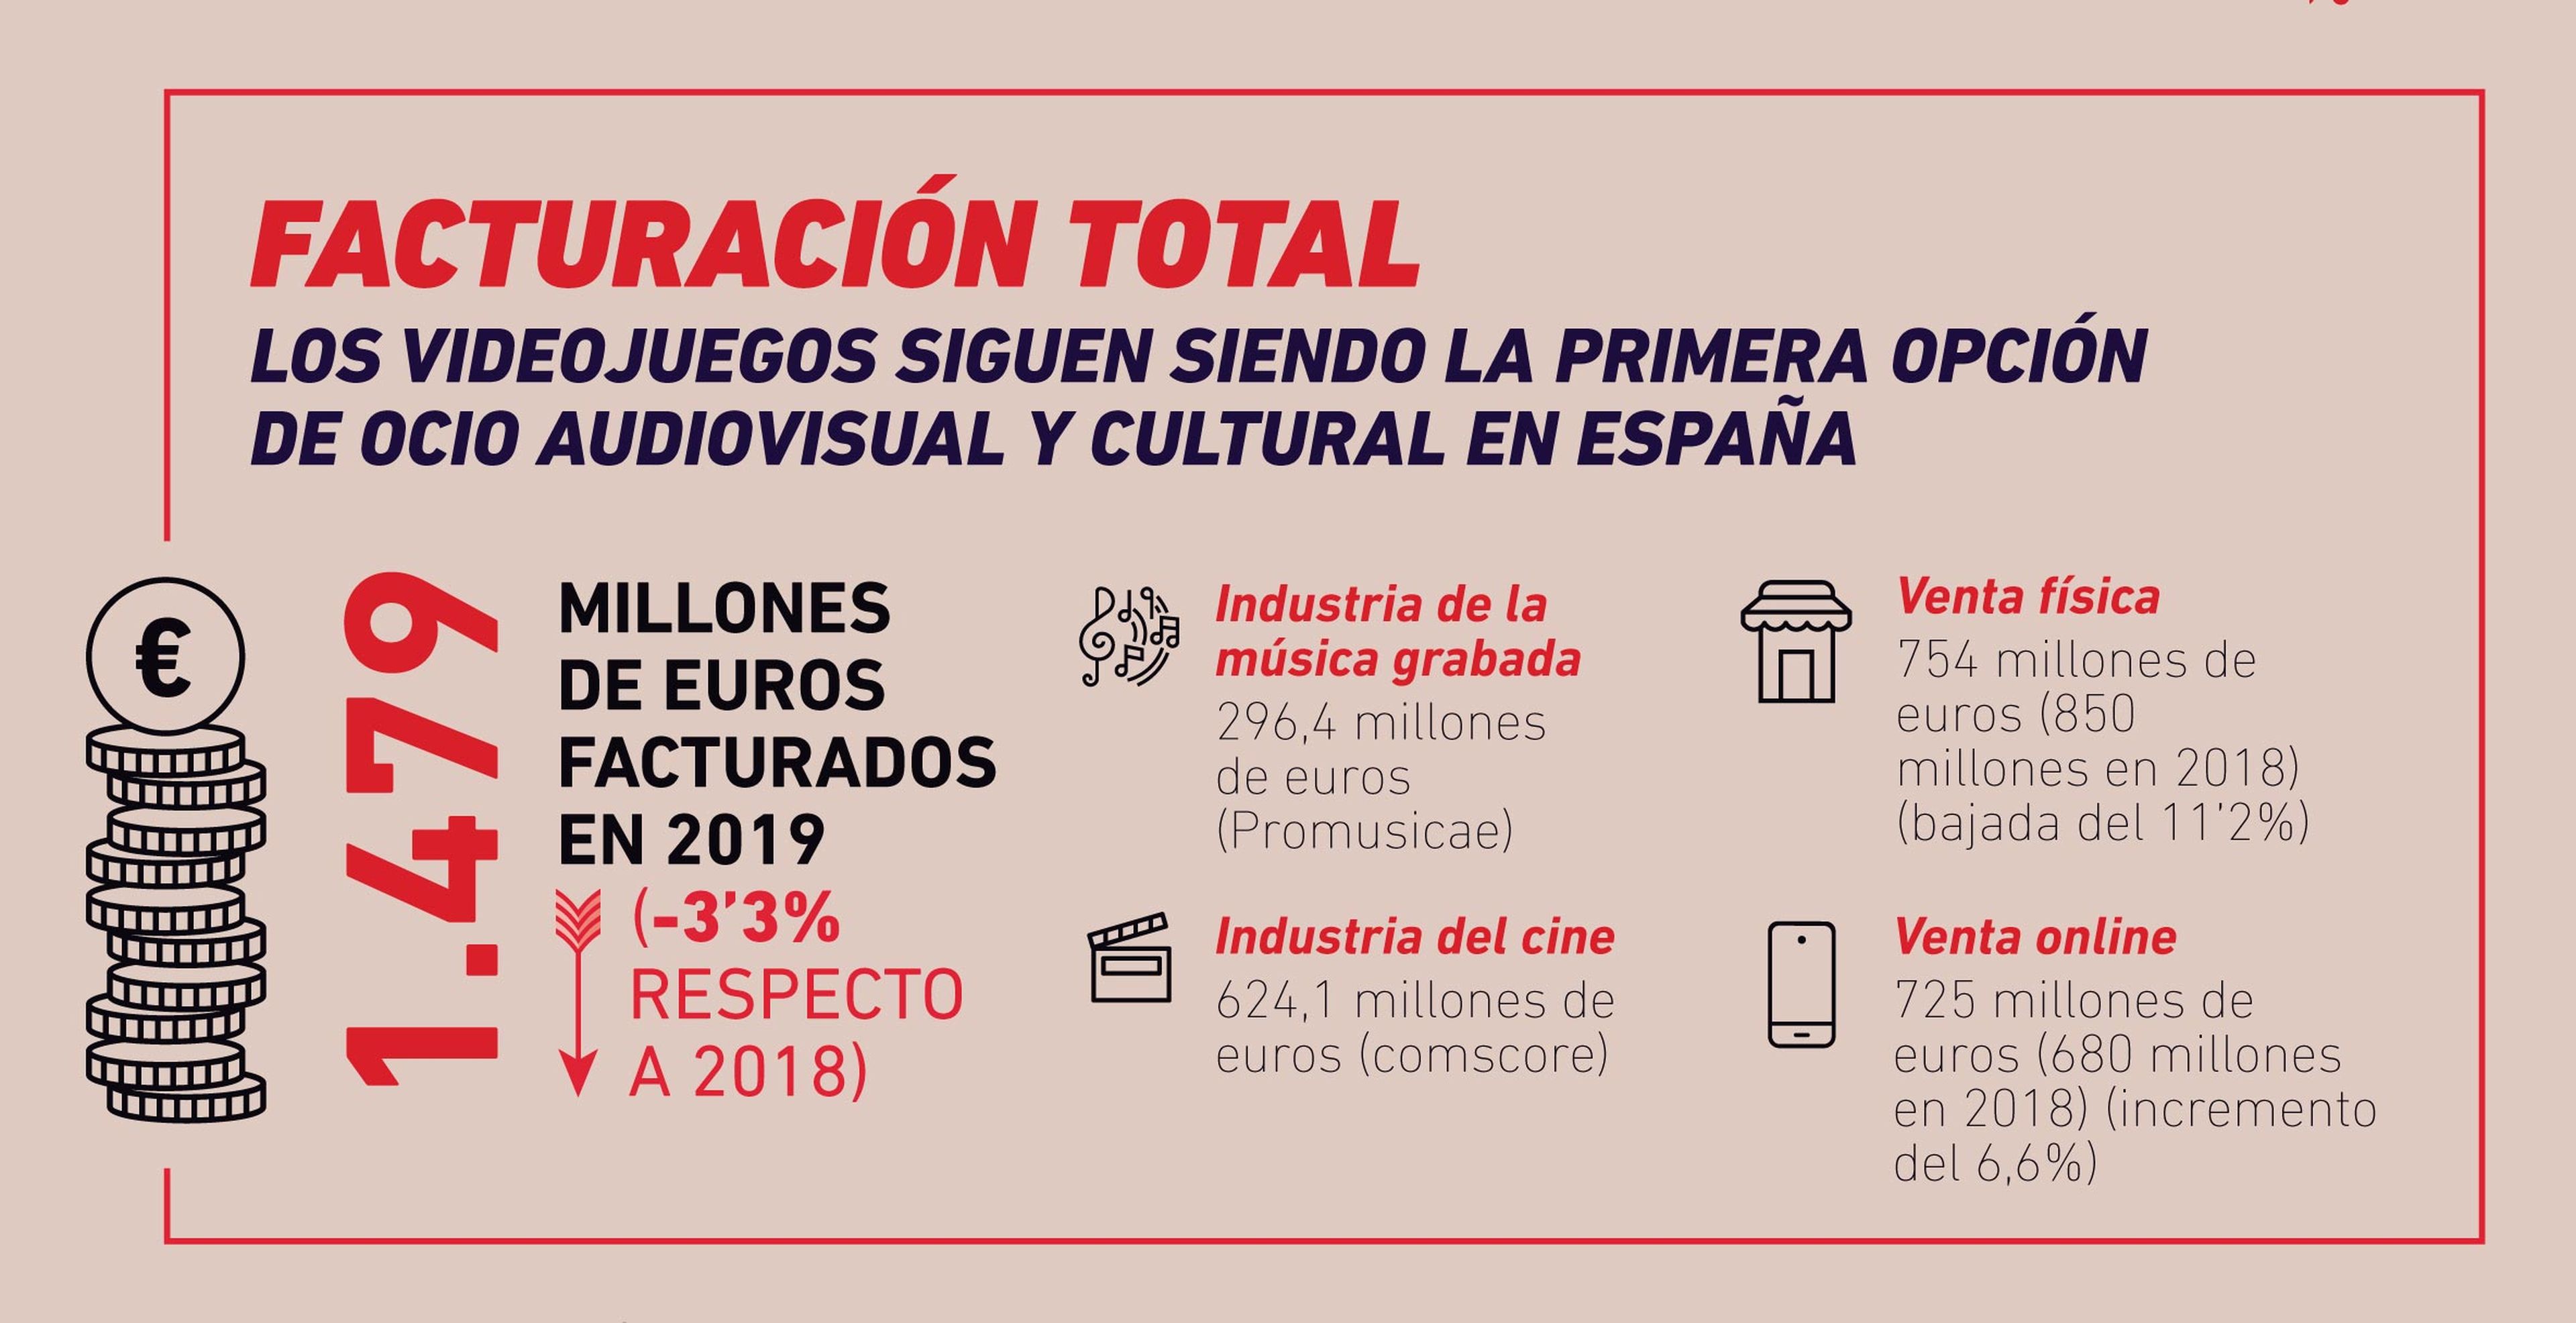 Facturación total del mercado de videojuegos en España en 2019